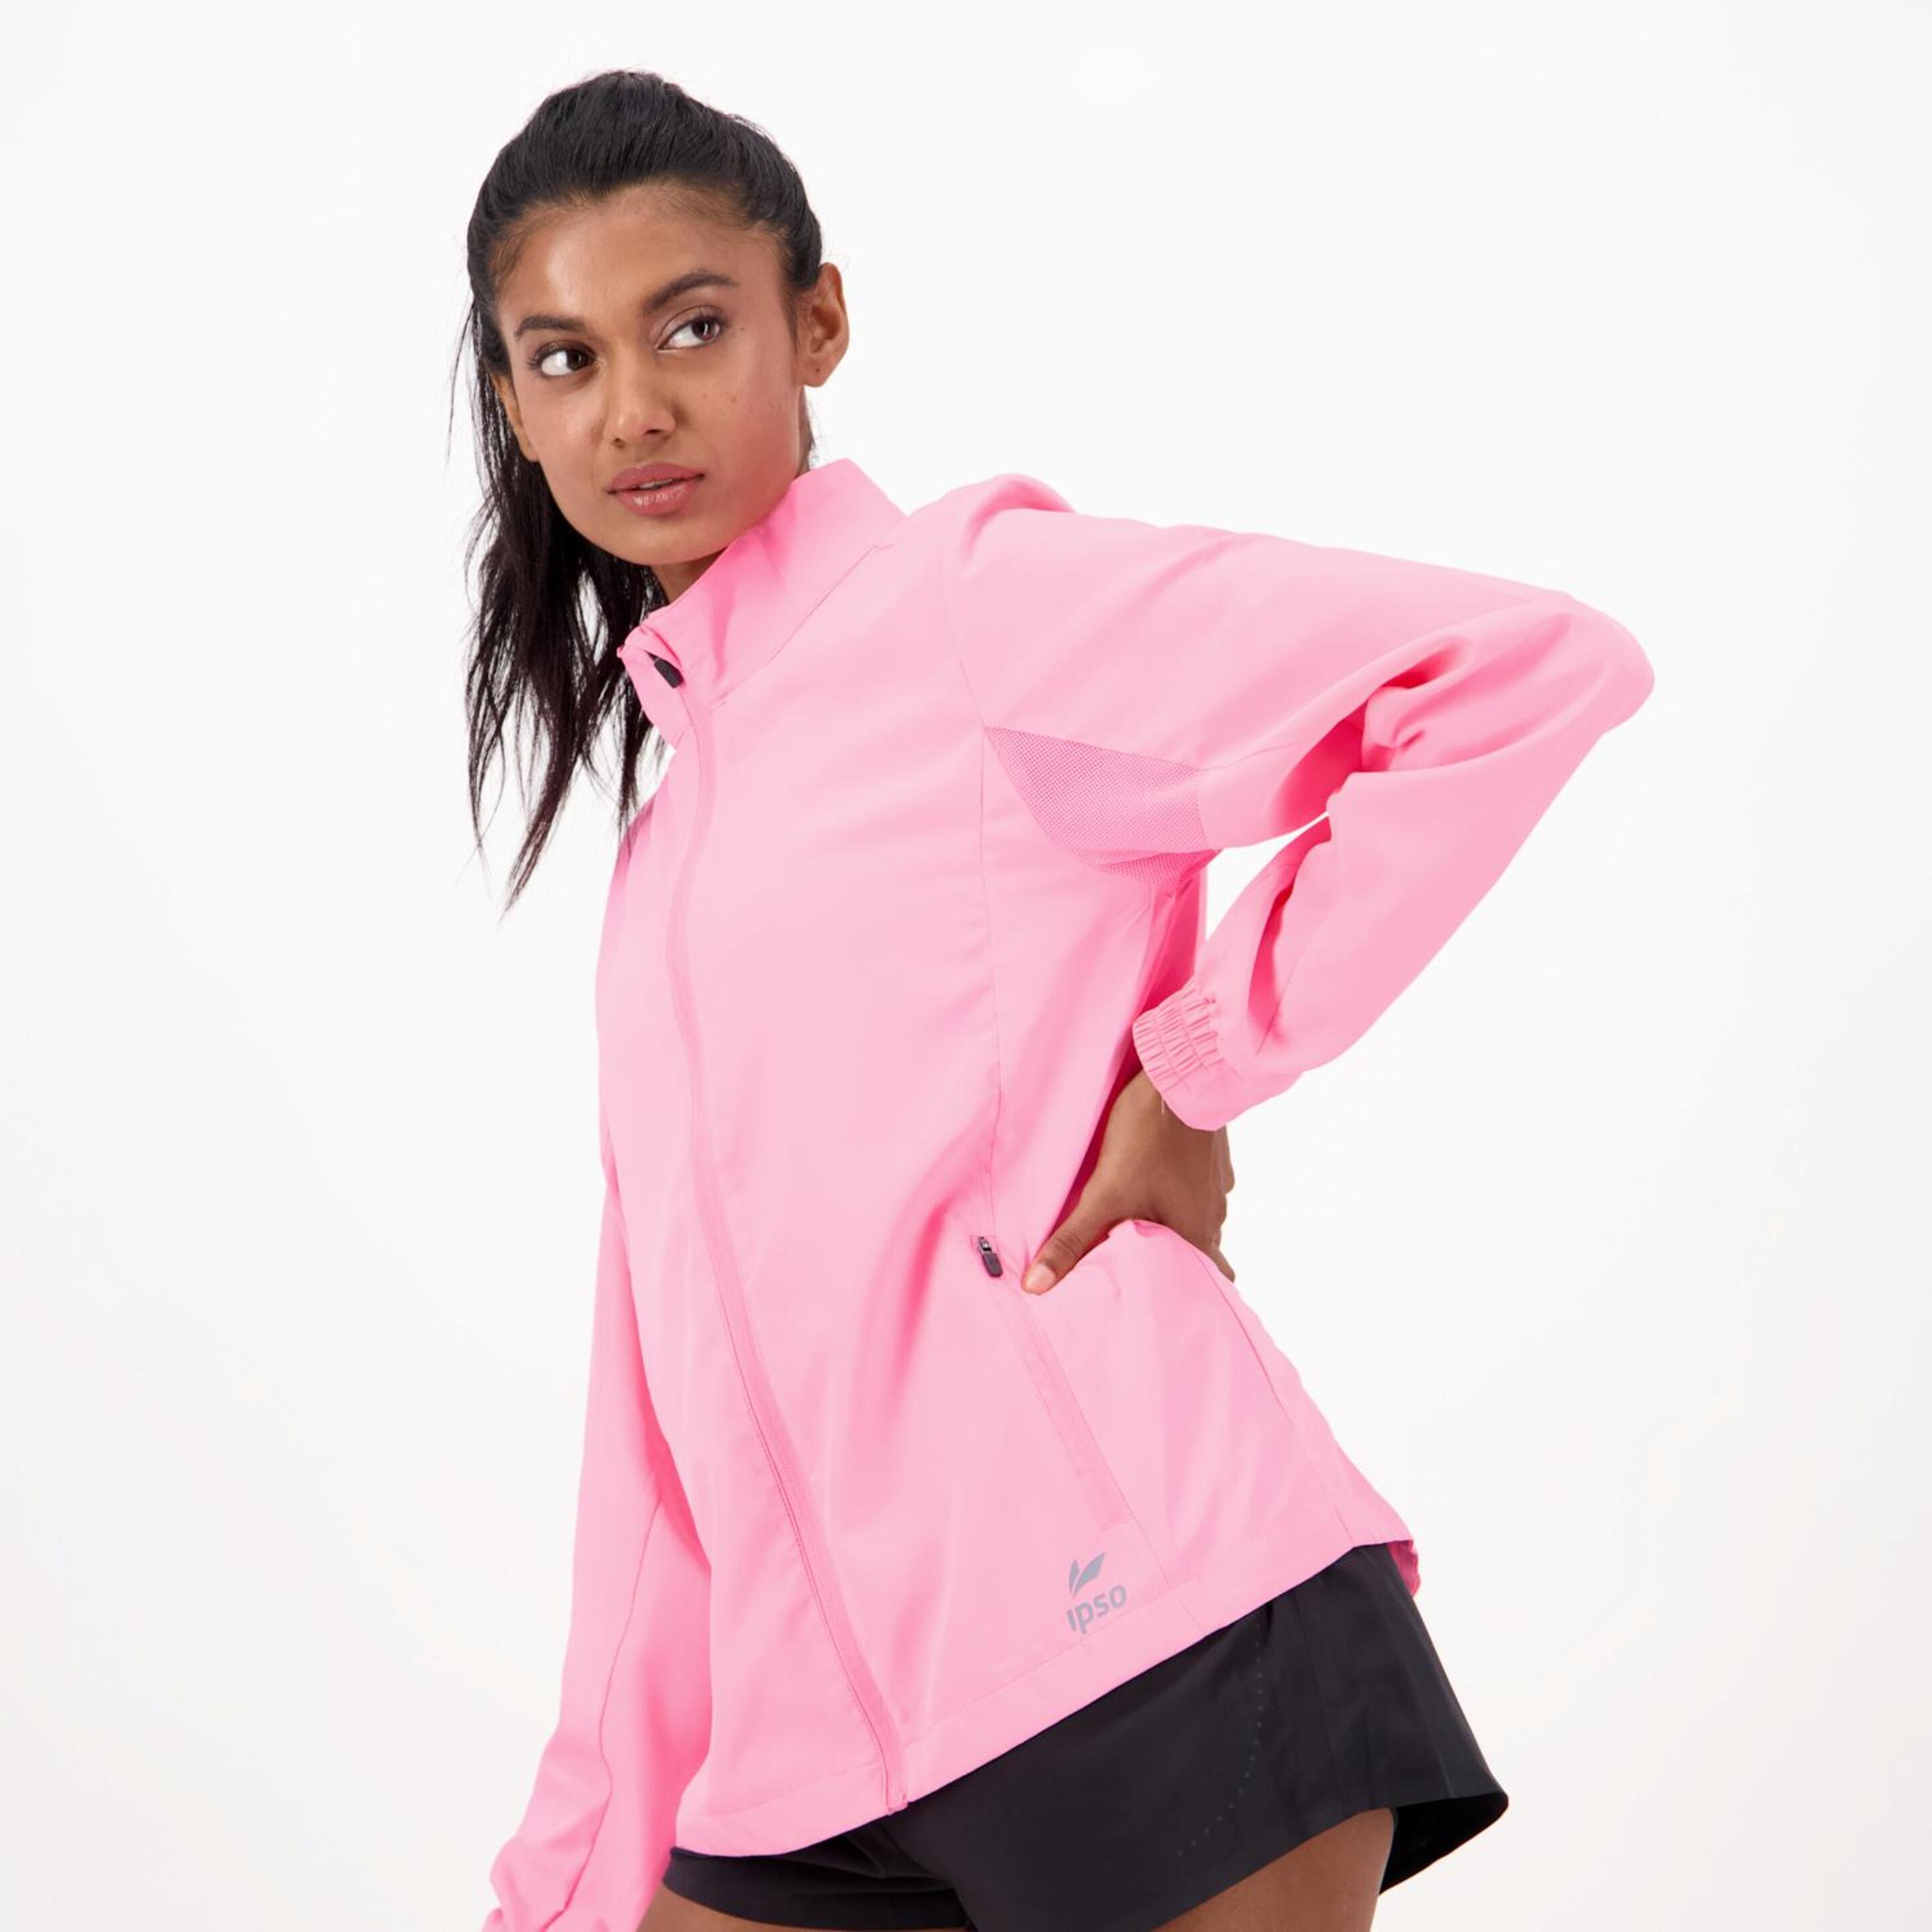 Ipso Basic - Rosa - Cortavientos Running Mujer  | Sprinter